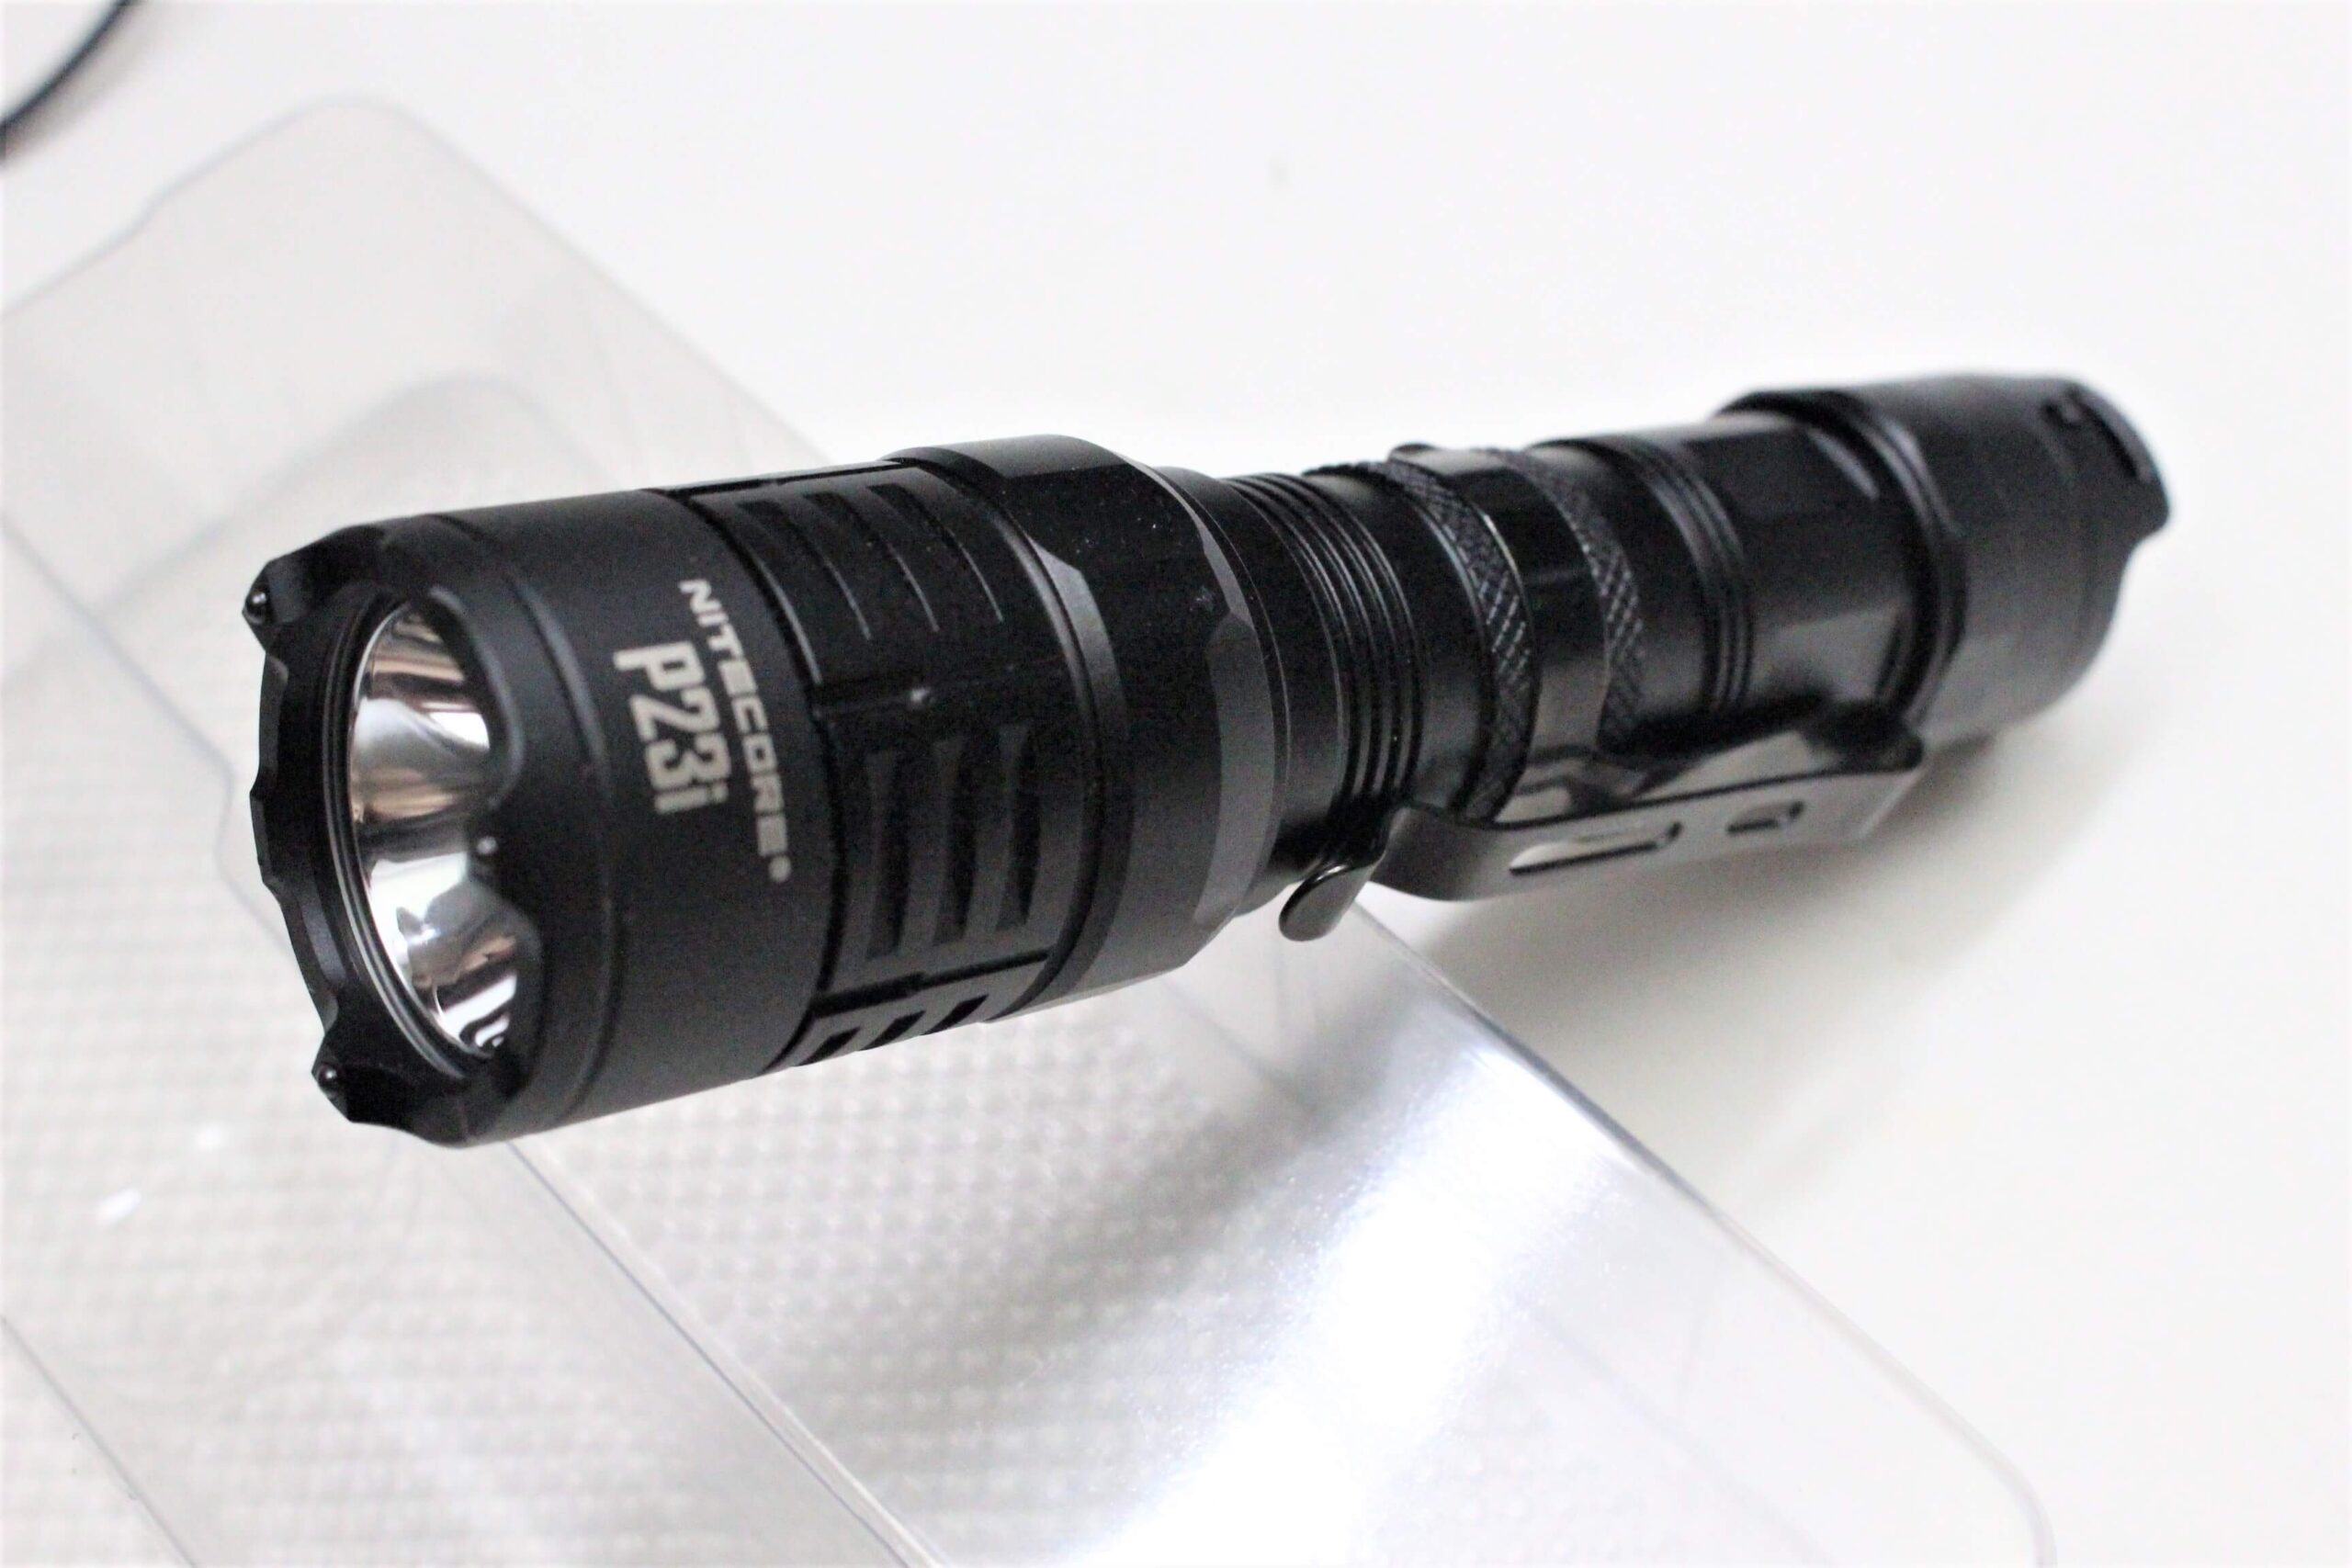 Nitecore P23i Long Range Tactical Flashlight Review 